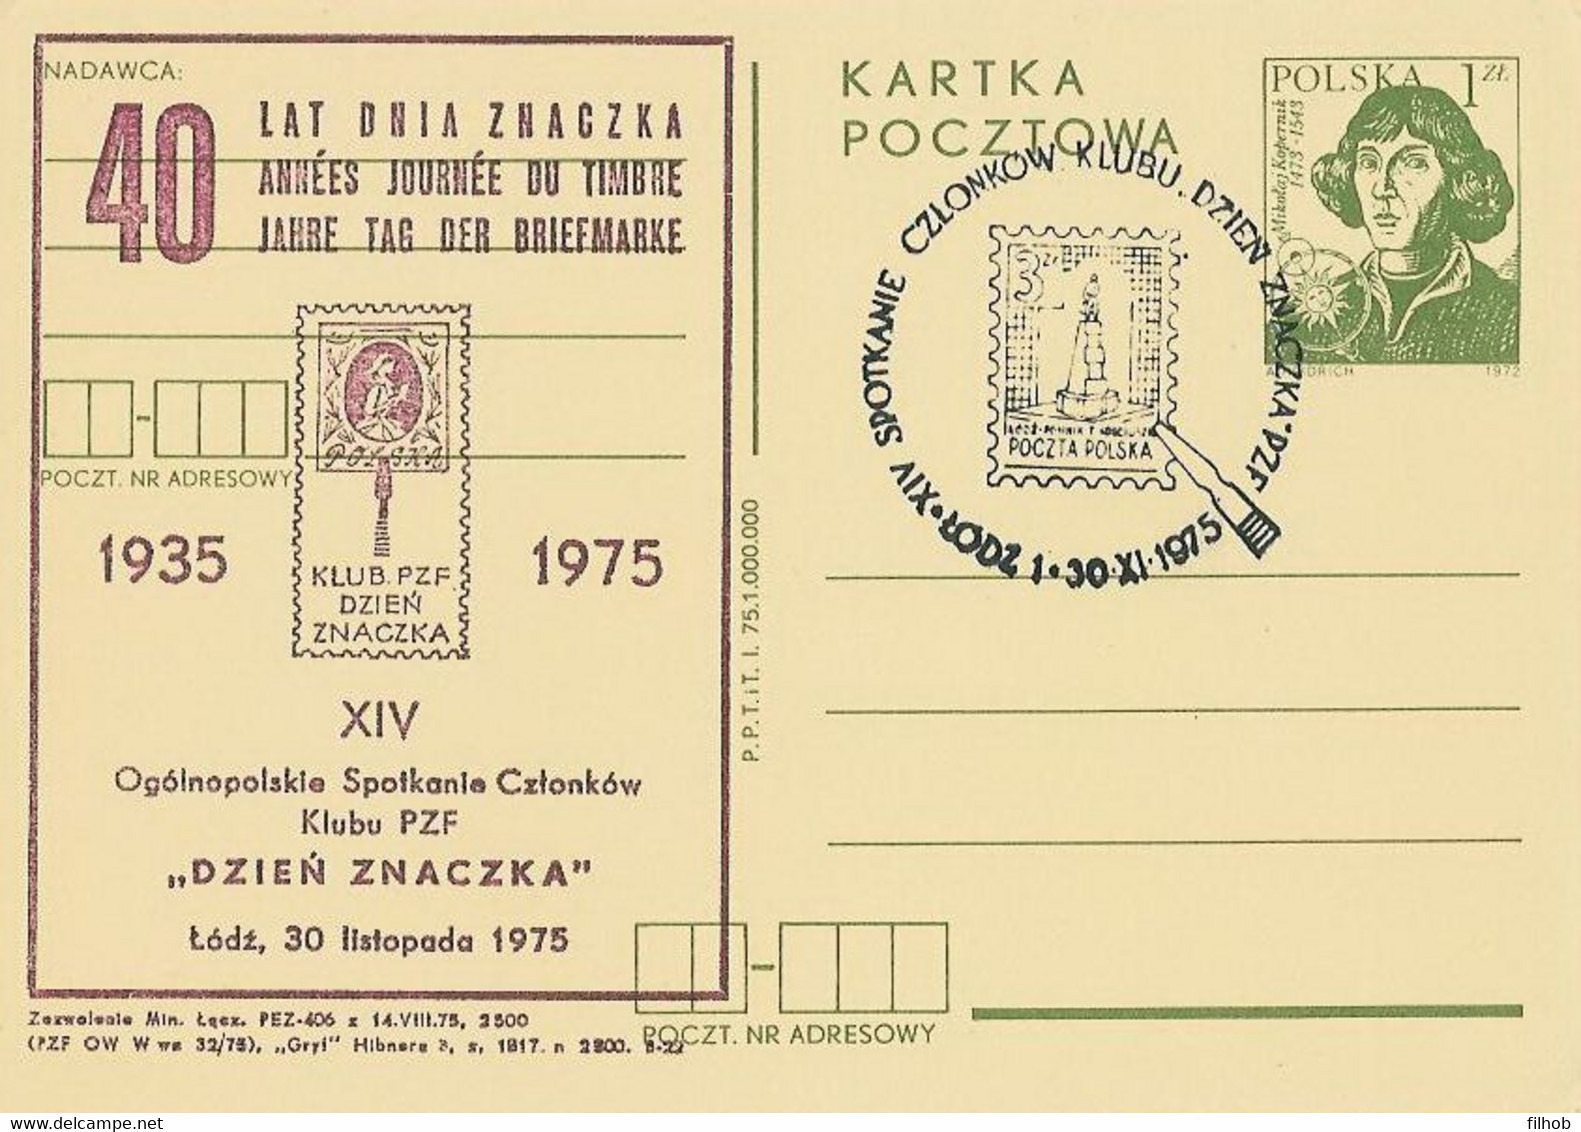 Poland Overprint Cp 547.02 Lodz: Stamp Day 1973 - Enteros Postales